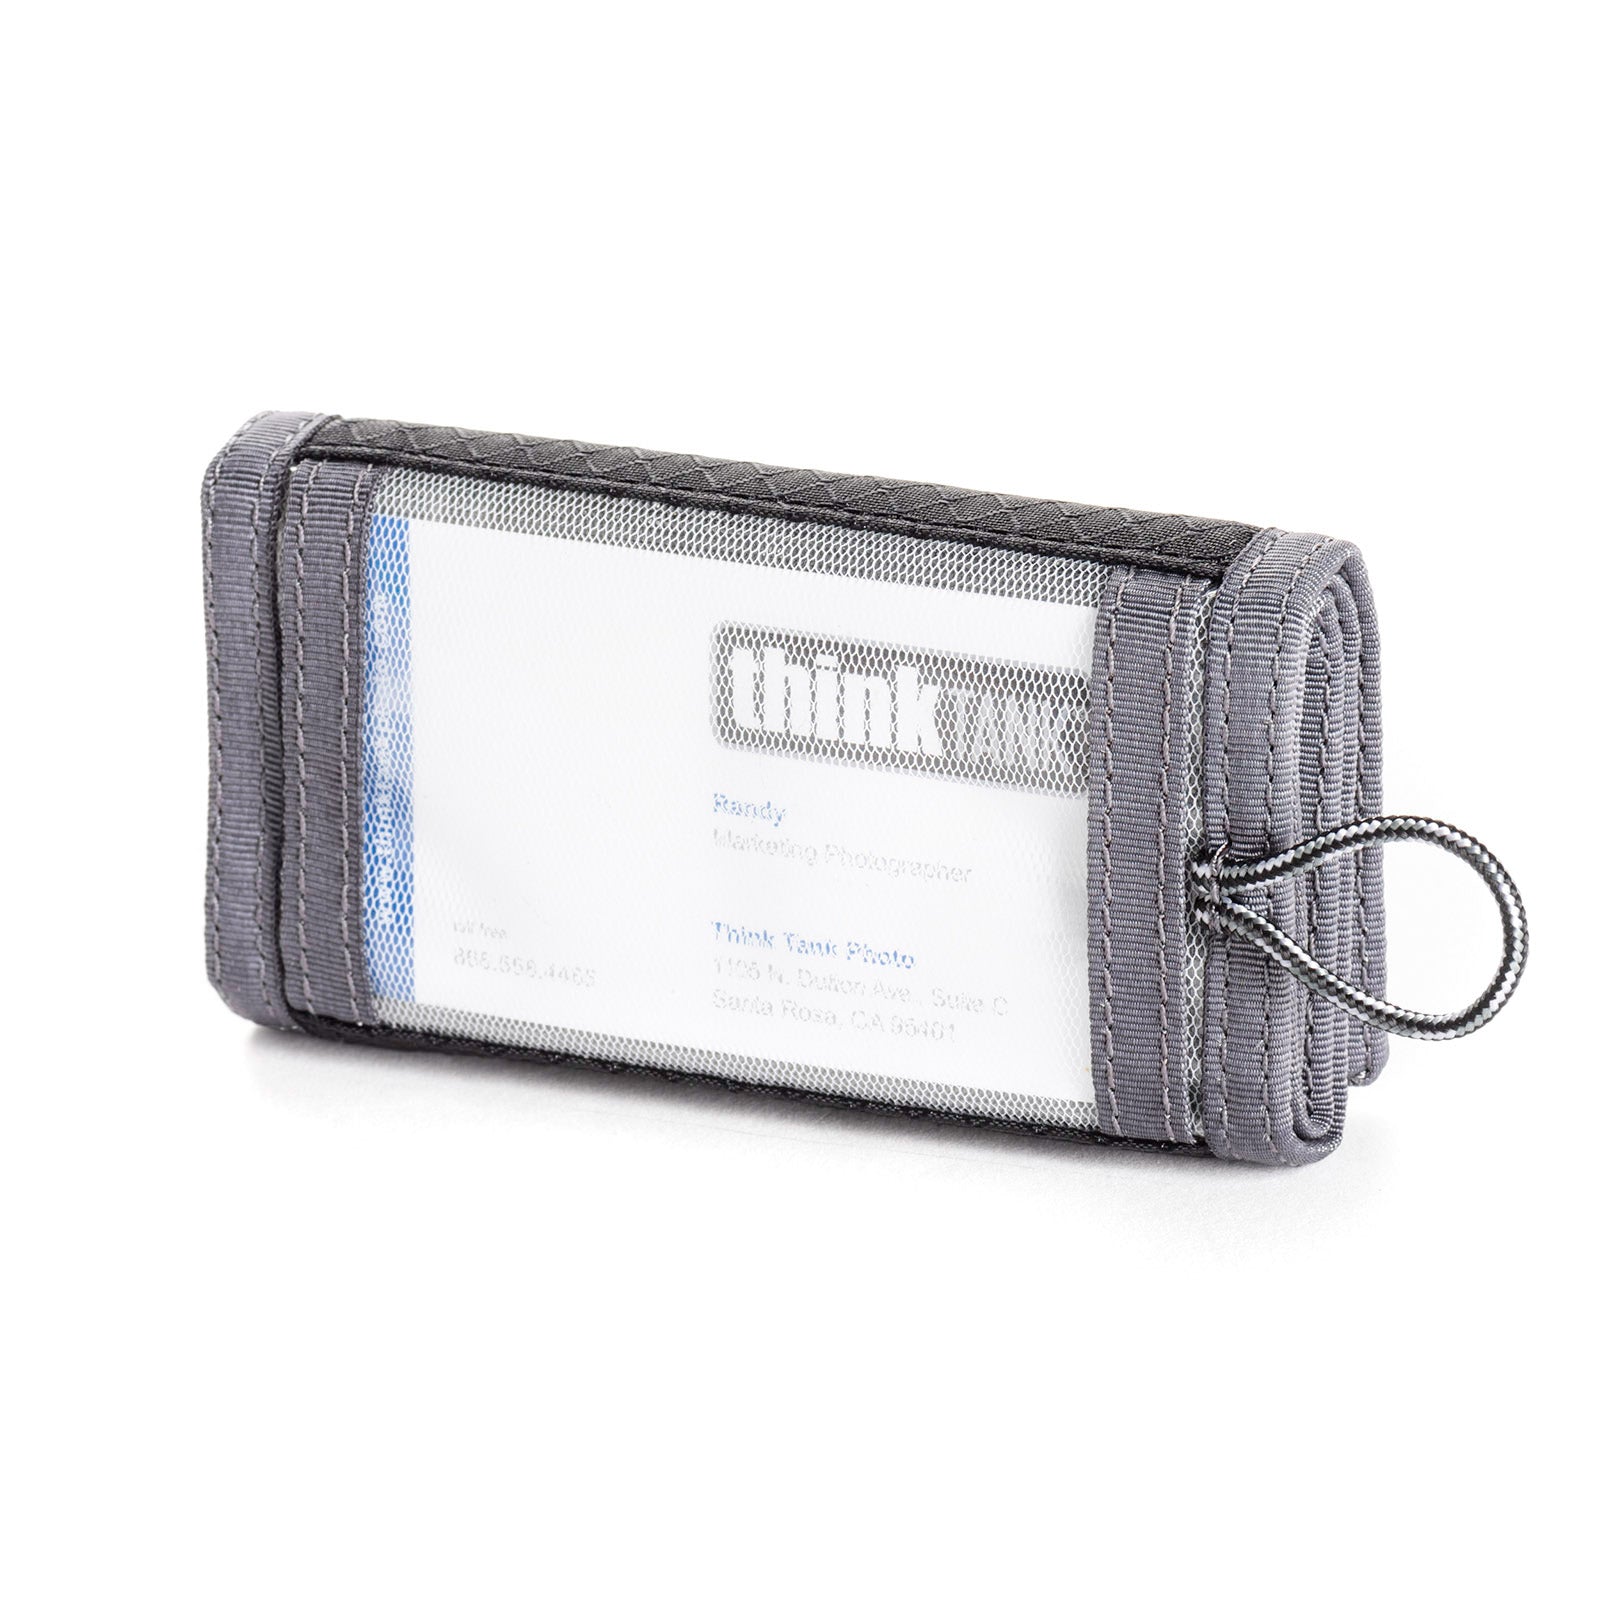 Business card holder / identification window